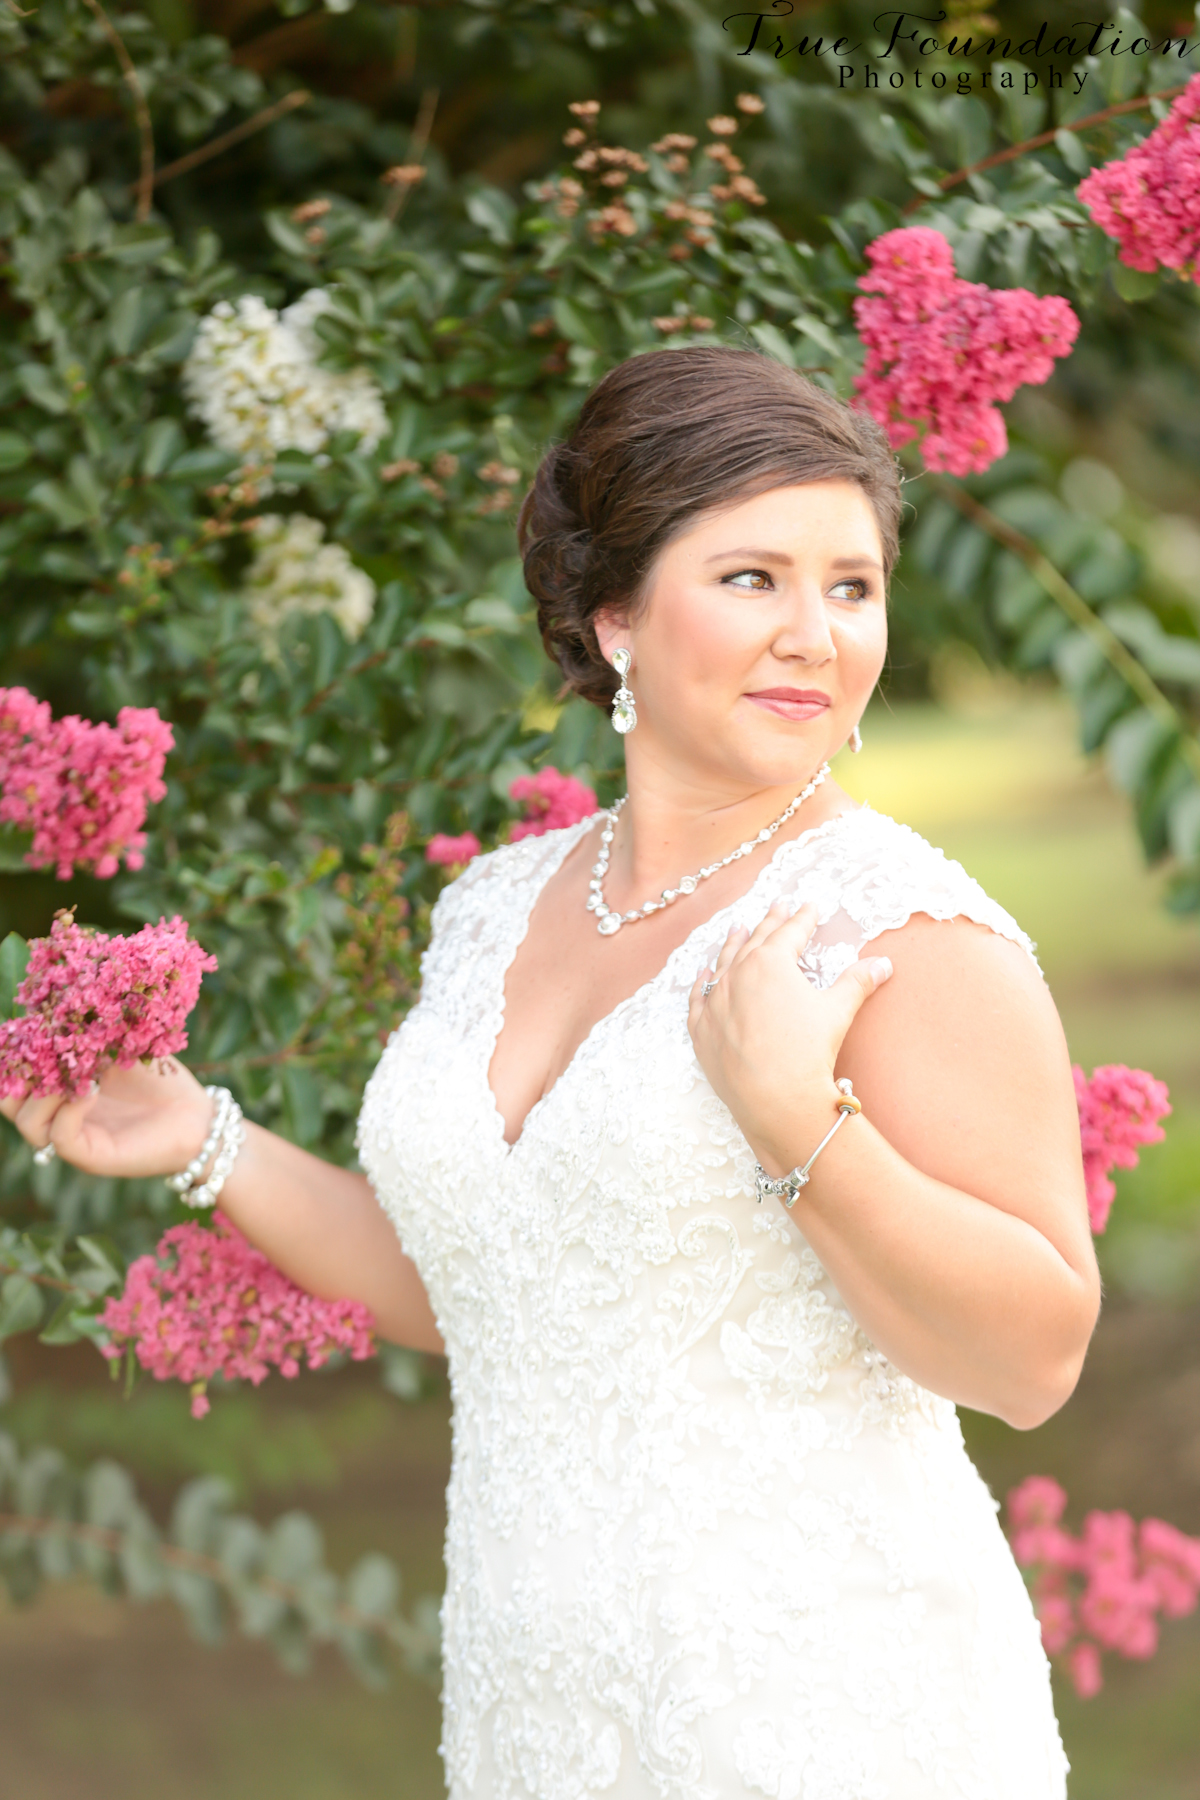 Bridal - Portrait - Photography - Photos - Hendersonville - NC - Shelby - Photographers - Farm - Country - Pinterest - Bride (28)